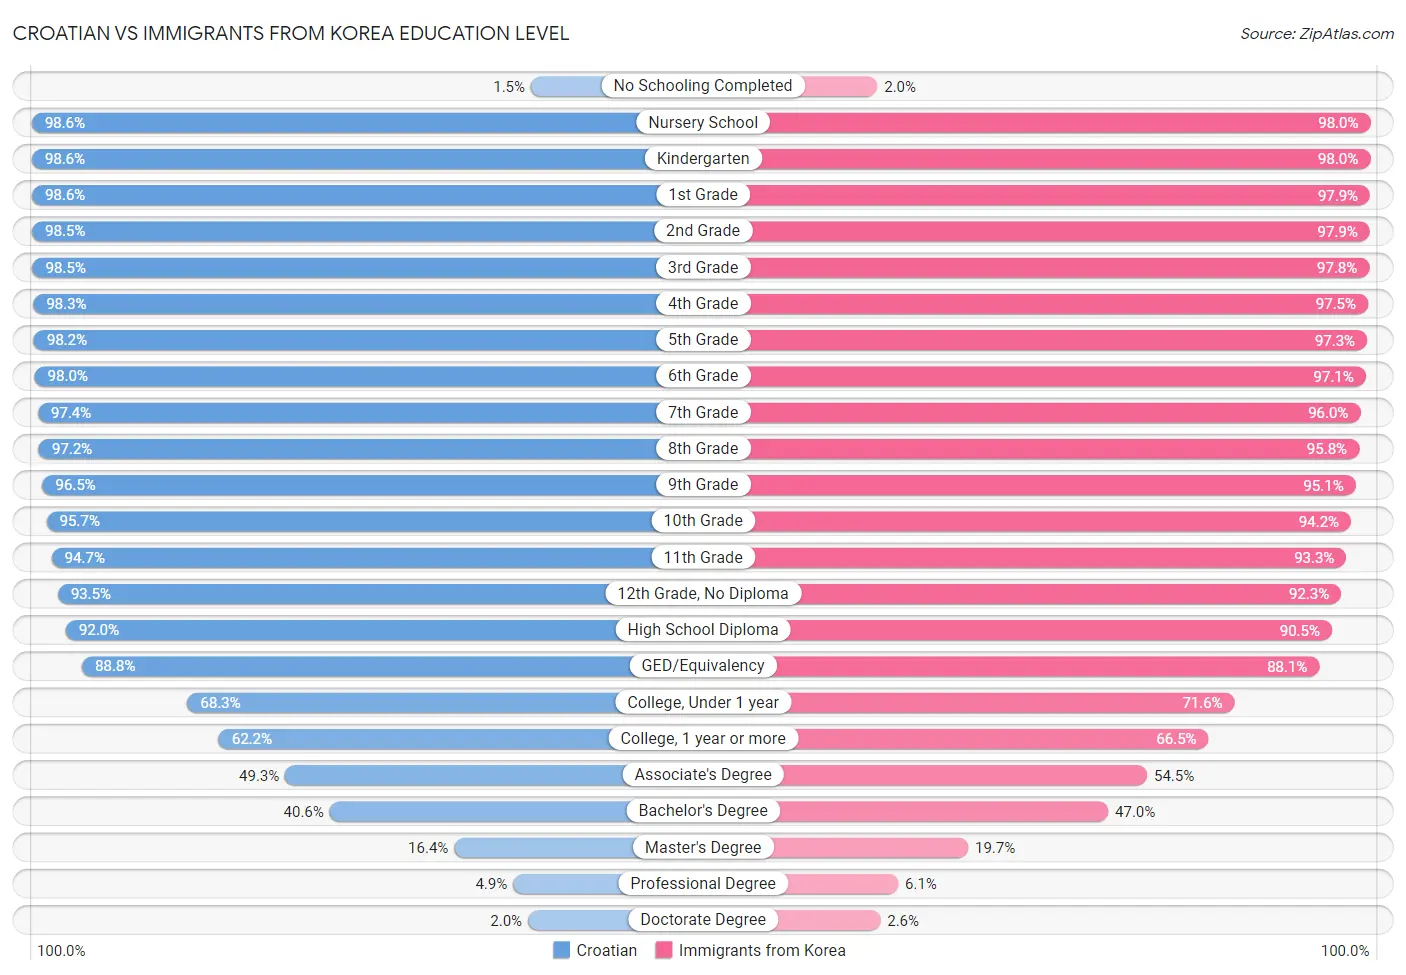 Croatian vs Immigrants from Korea Education Level